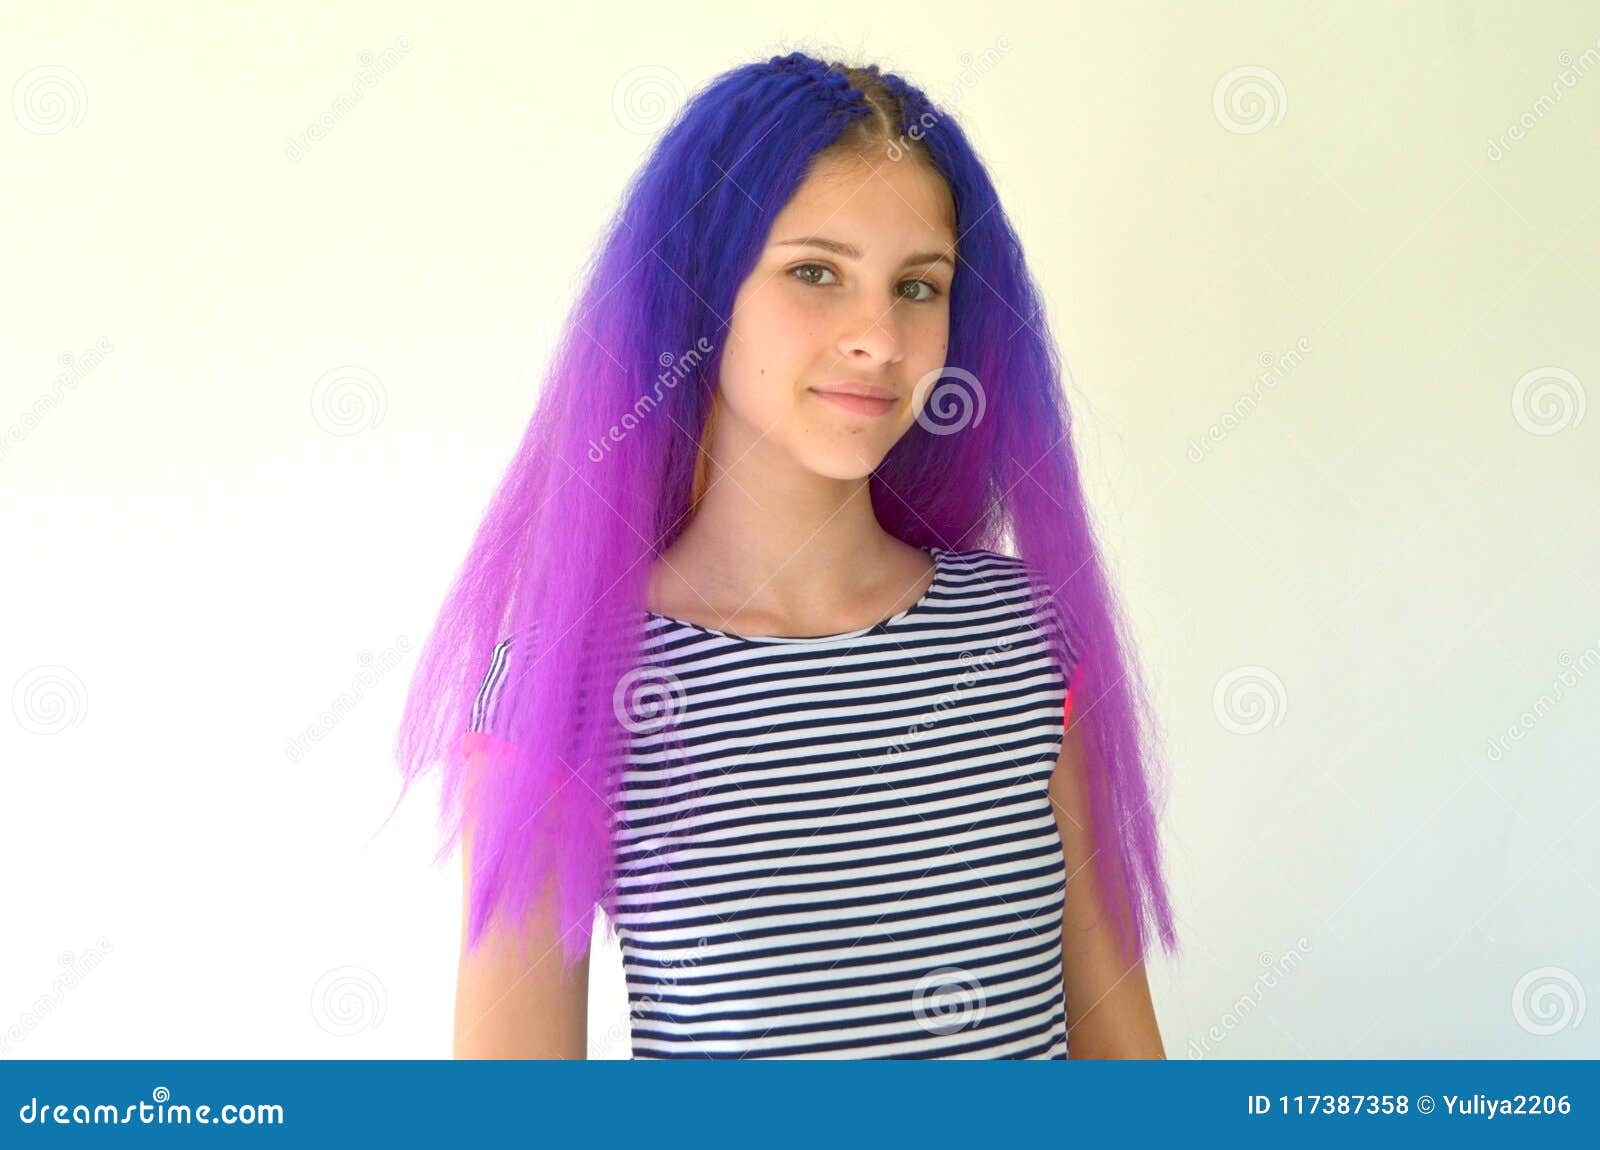 blue ombre kanekalon hair